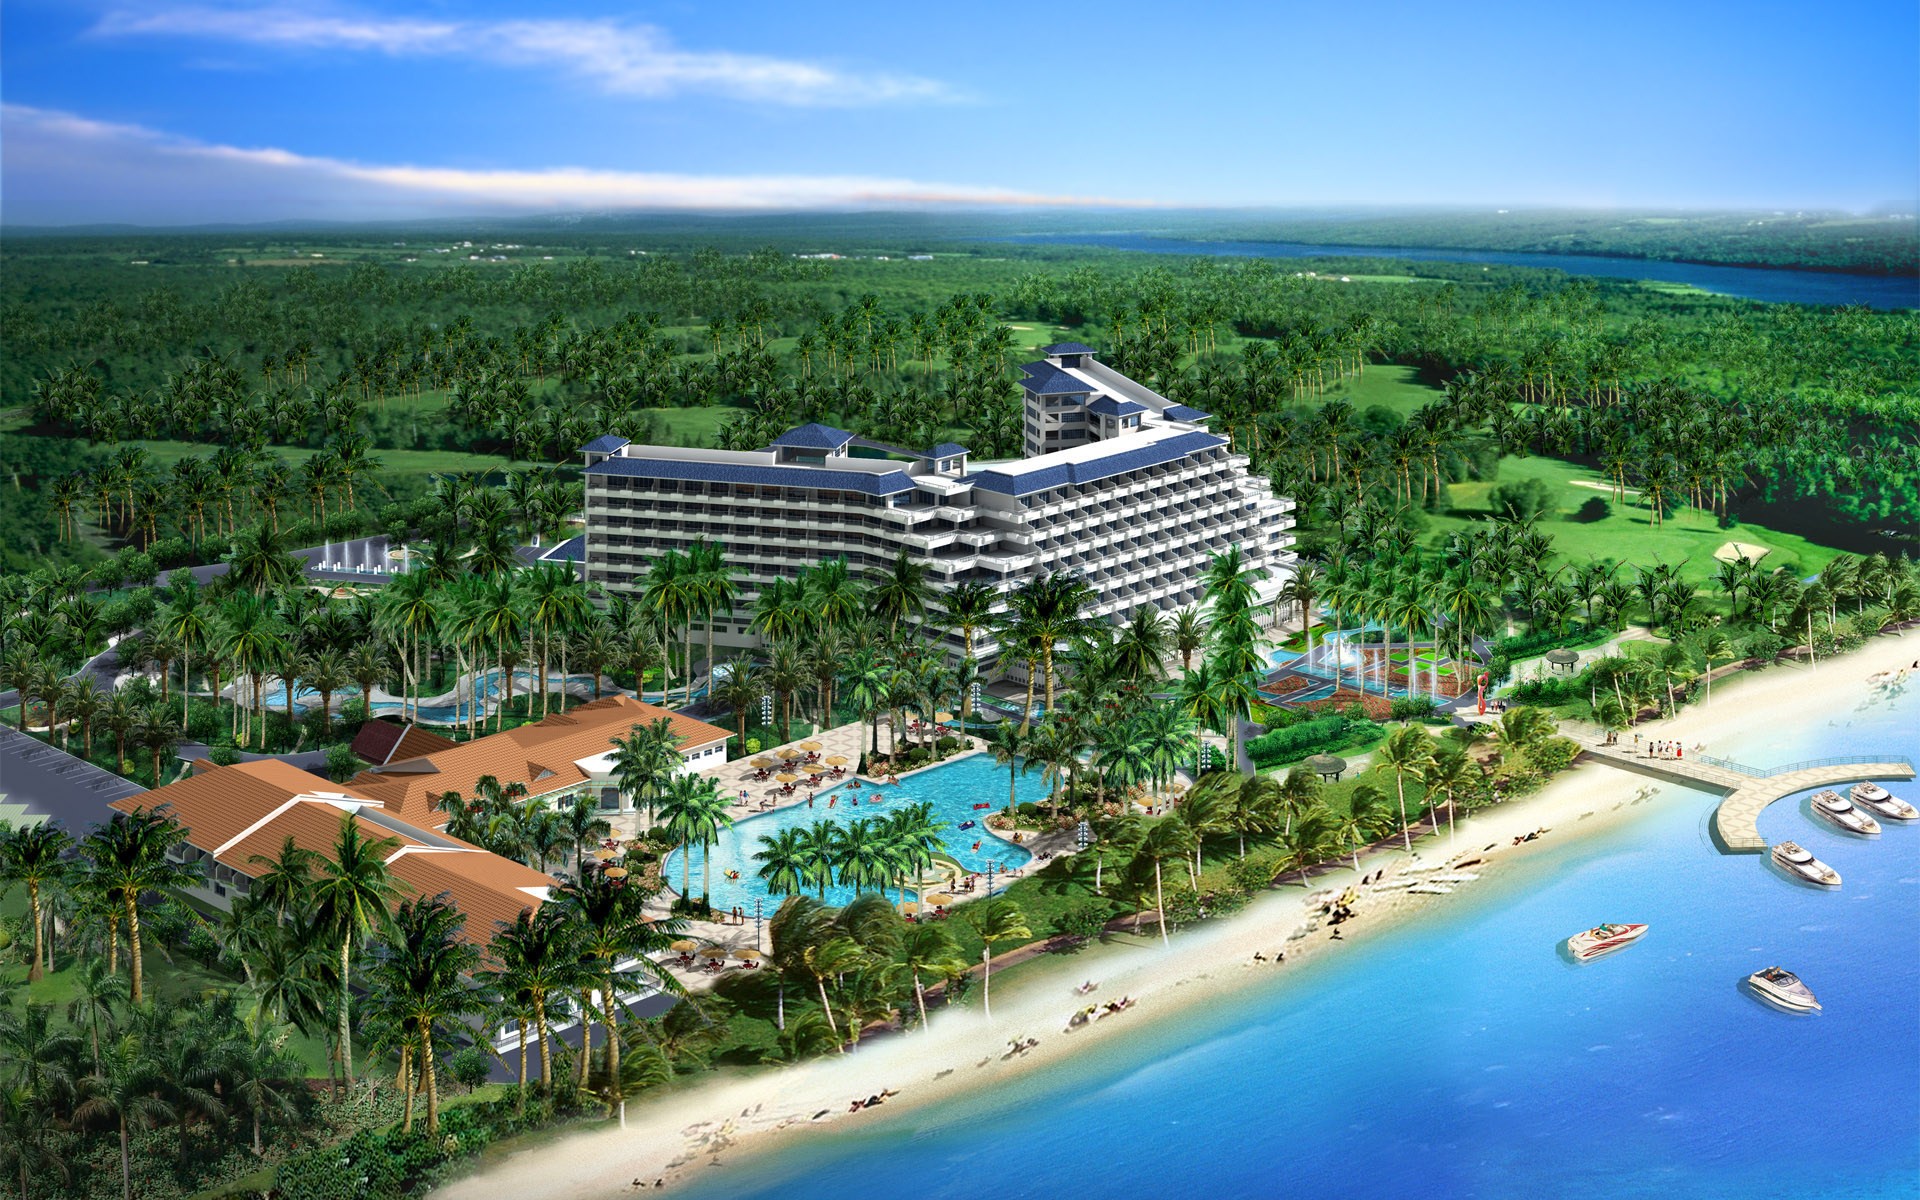 General 1920x1200 digital art concept art hotel landscape beach palm trees CGI